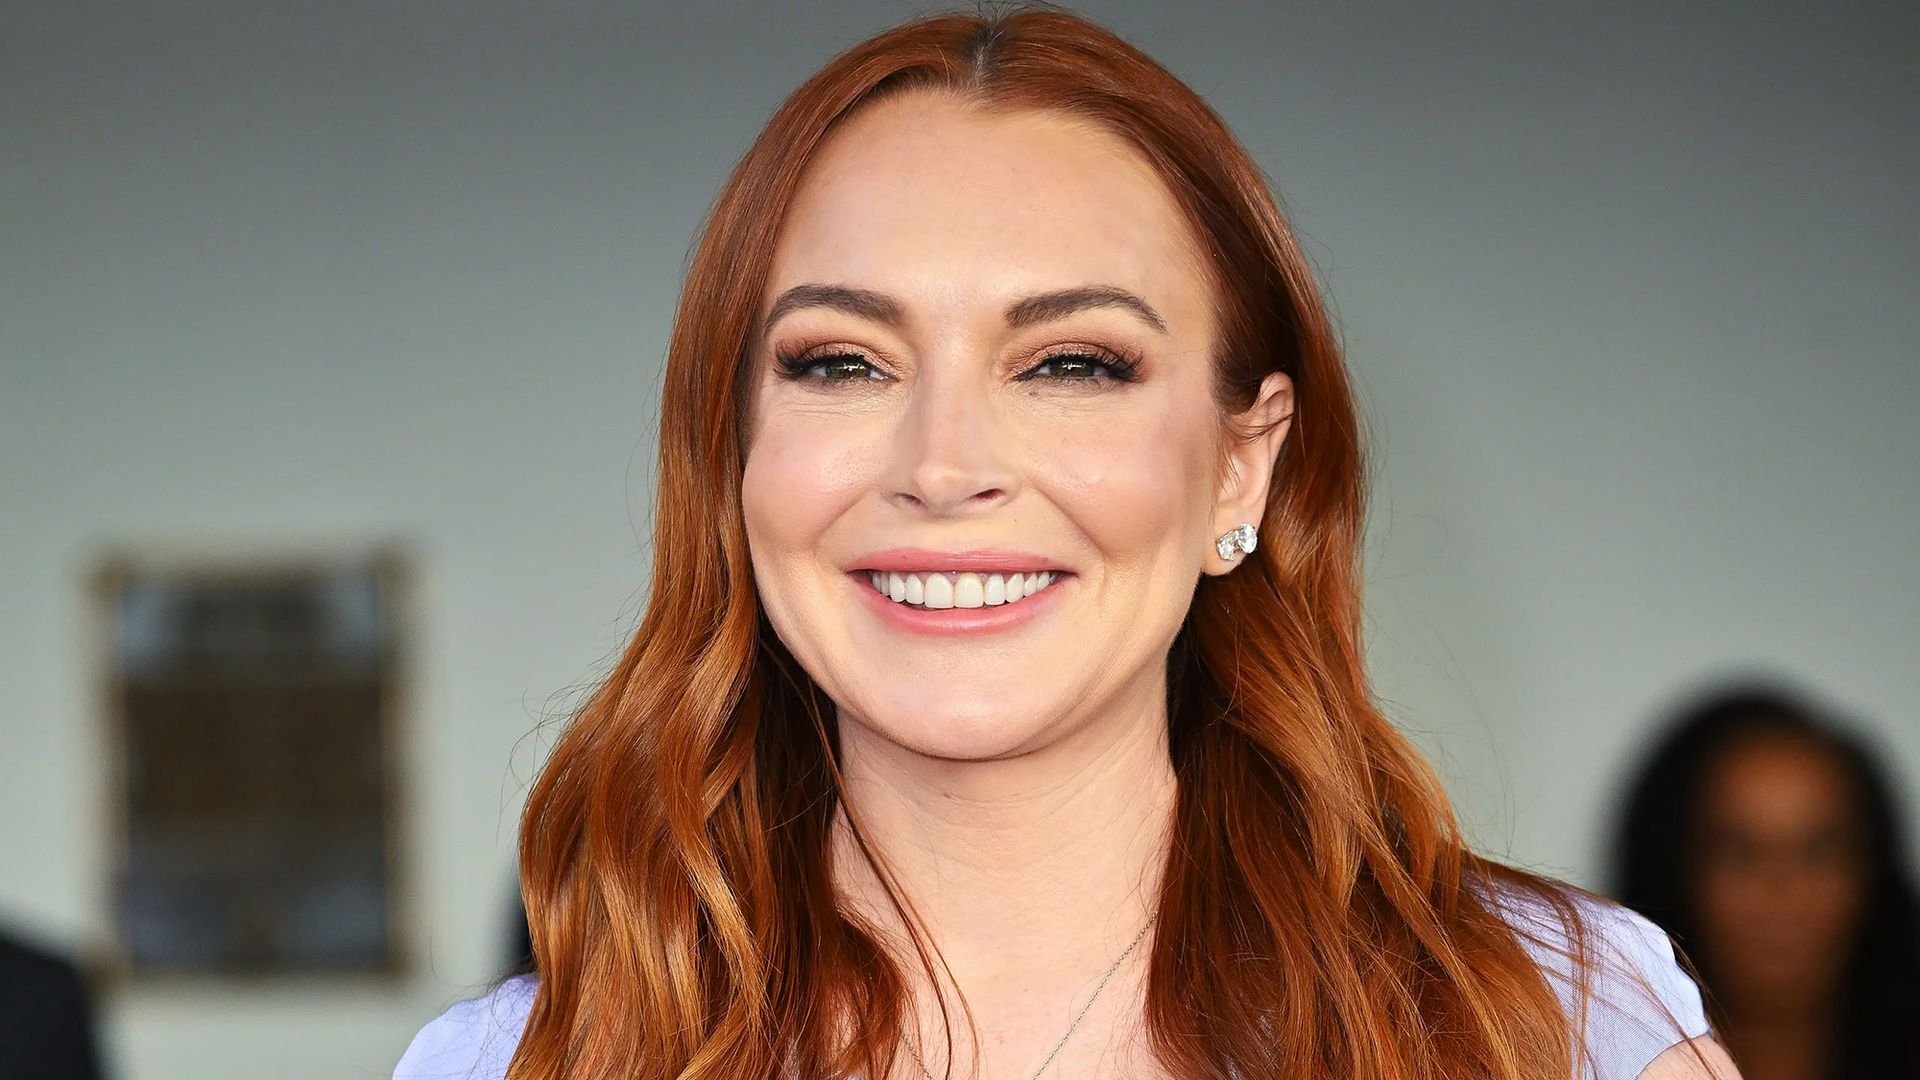 Actress, singer and socialite Lindsay Lohan